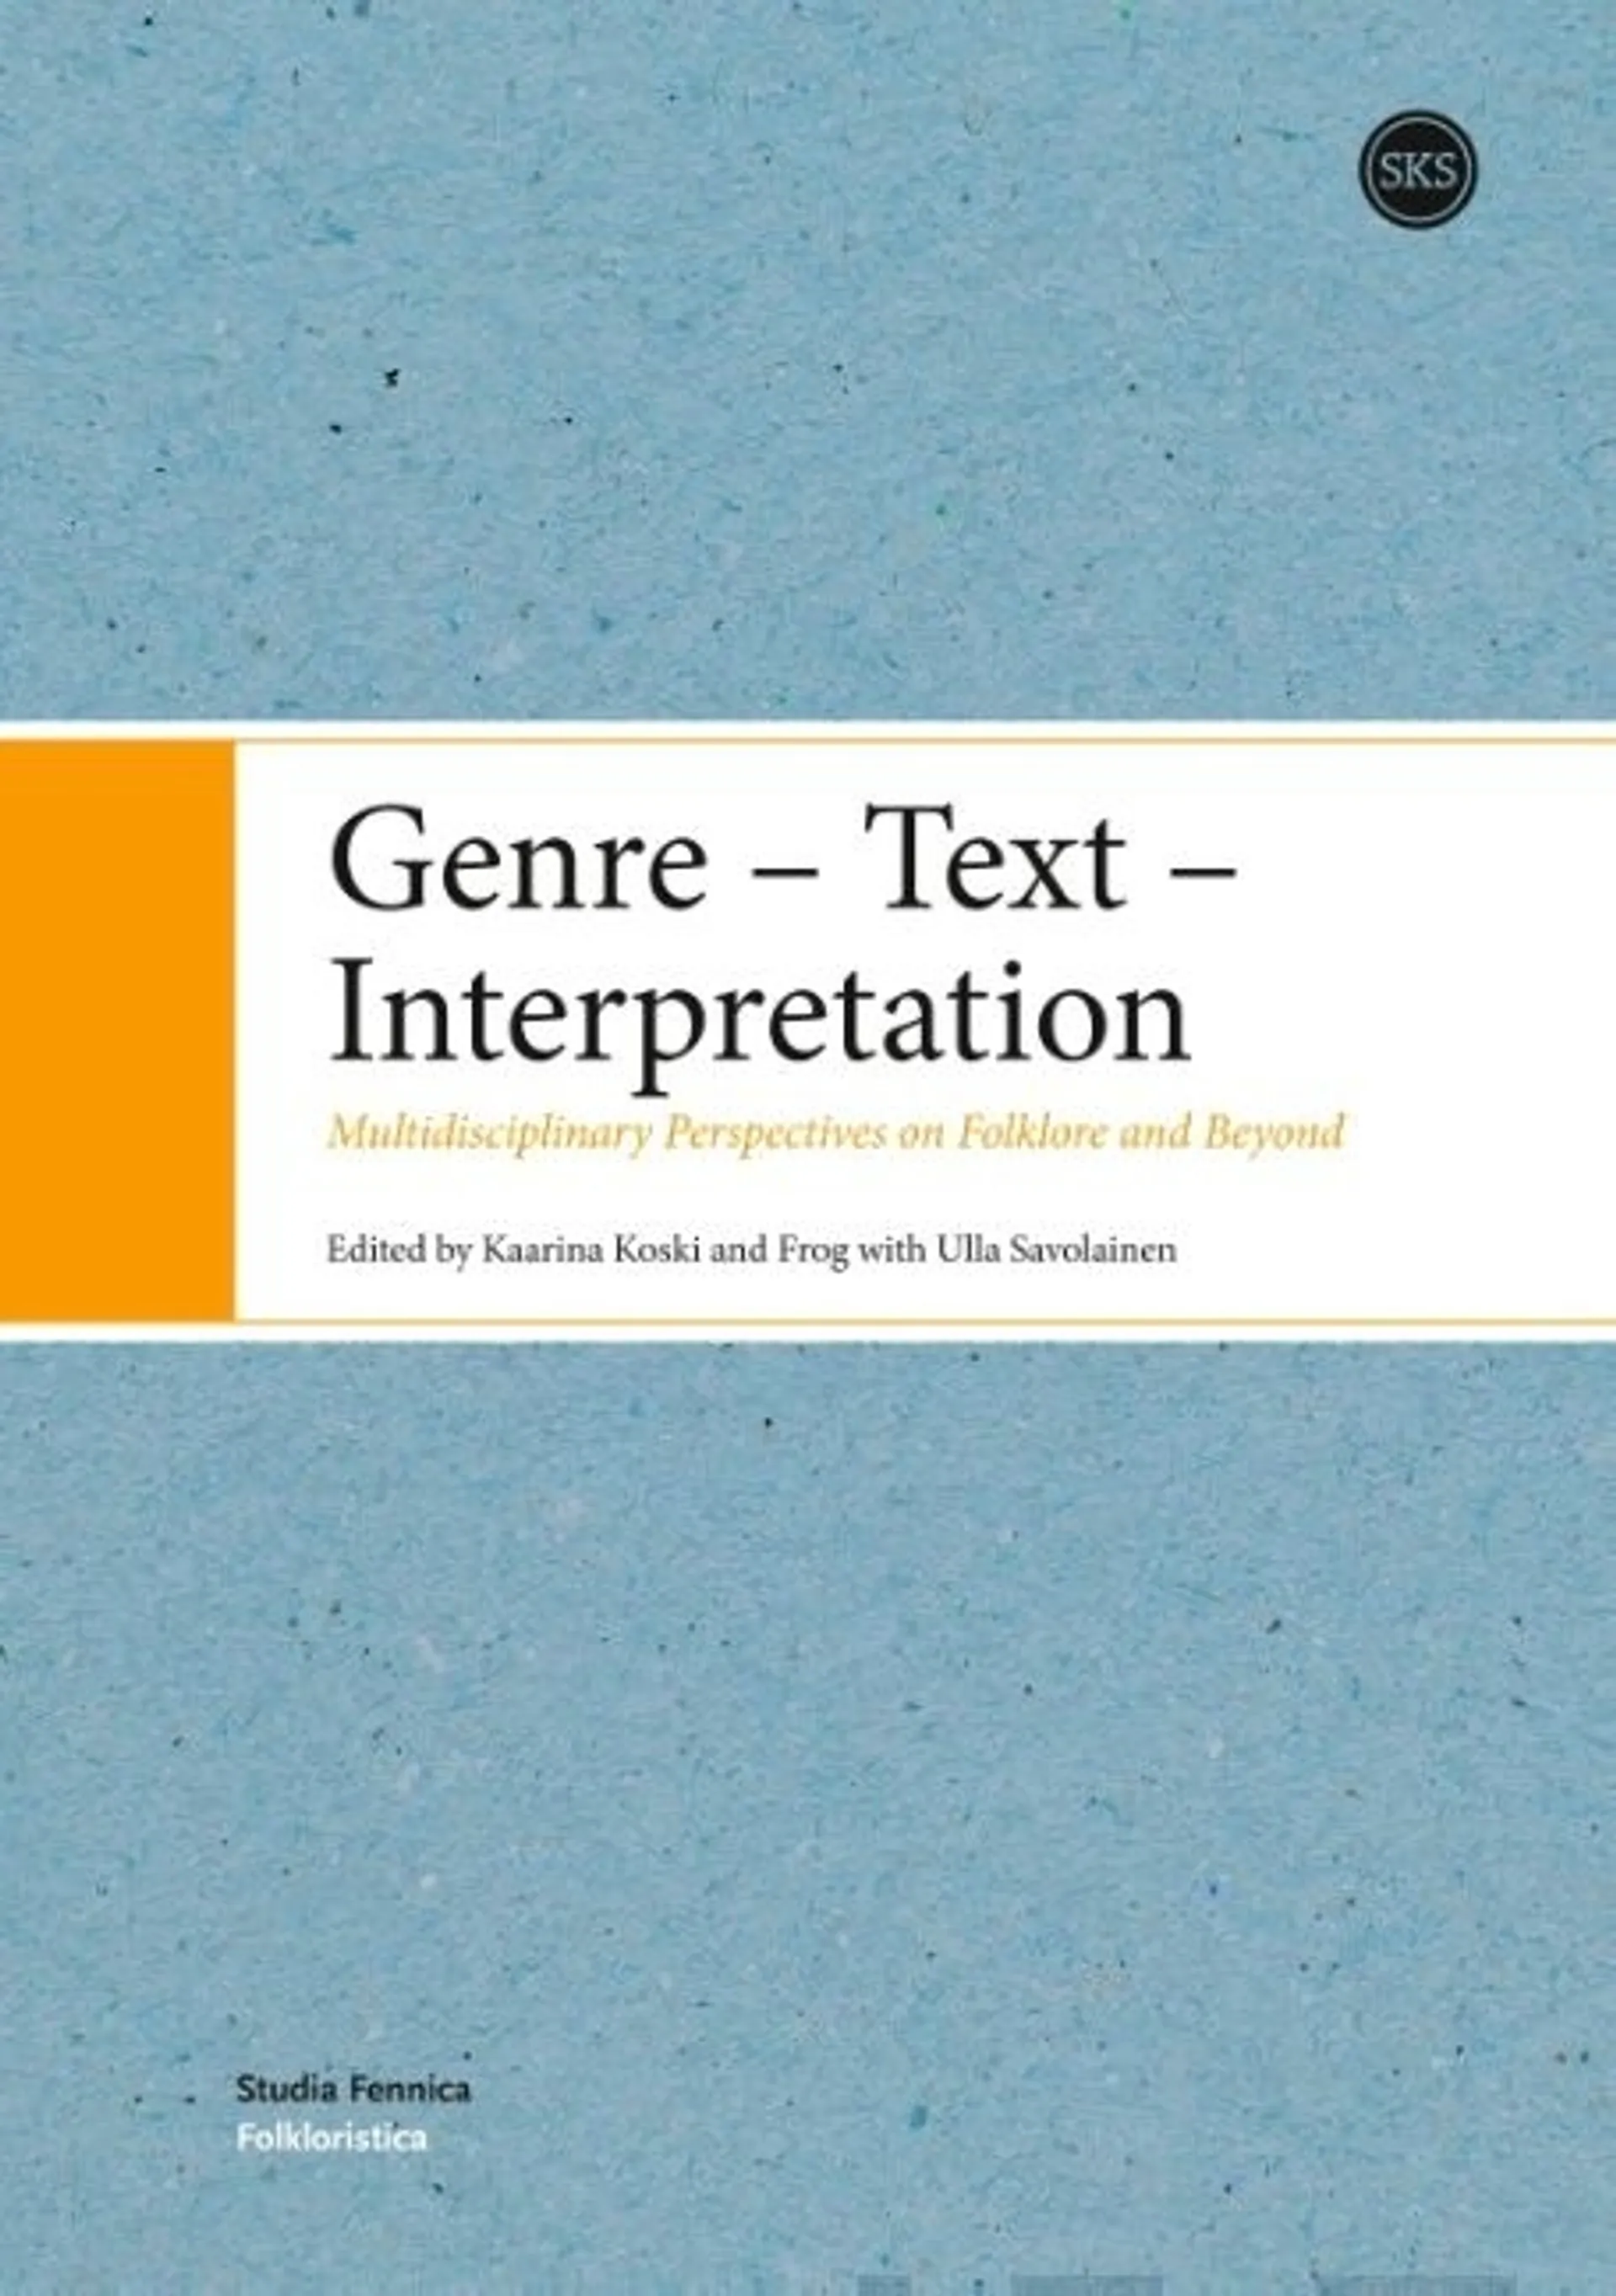 Koski, Genre -Text - Interpretation